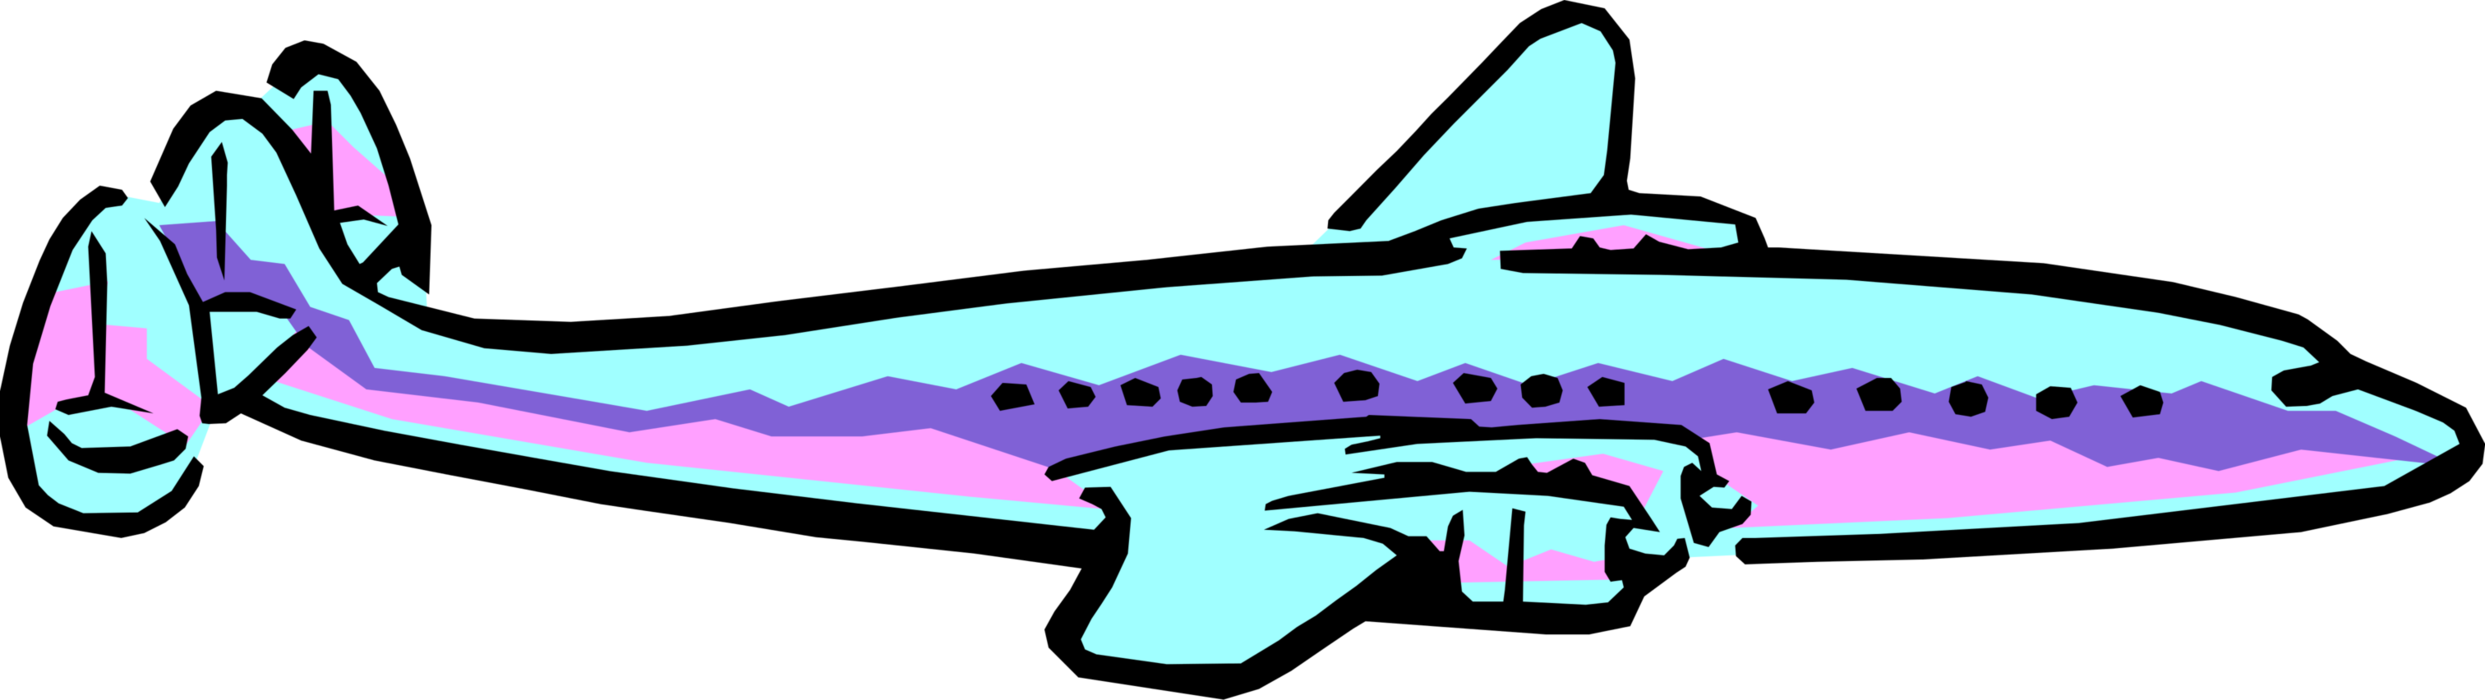 Vector Illustration of Propeller Driven Passenger Plane Airplane in Flight